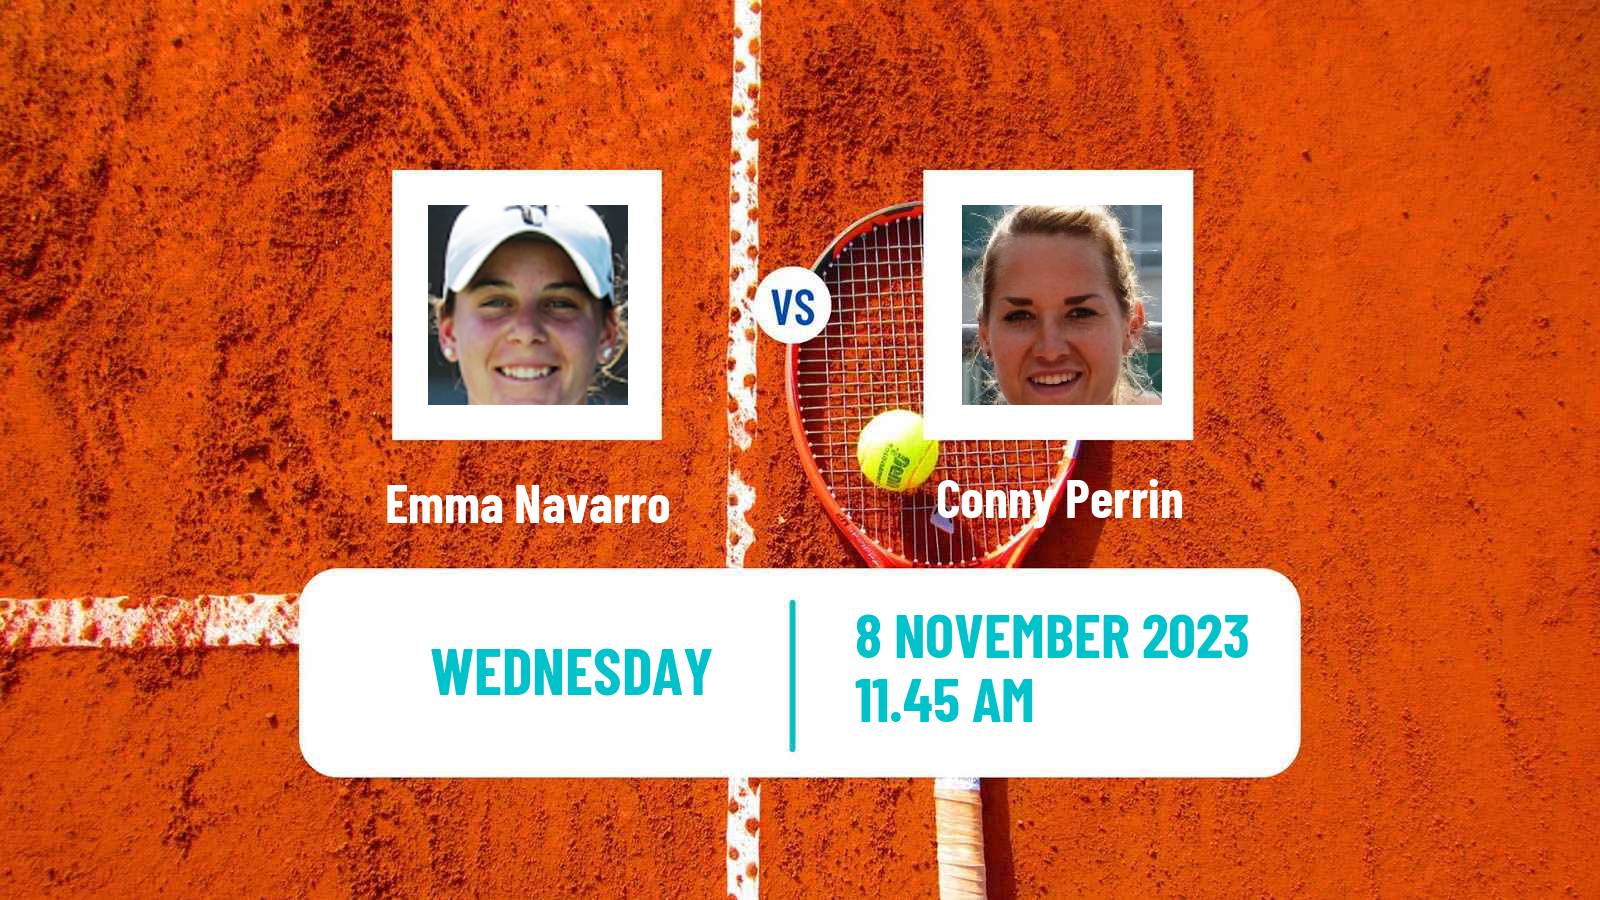 Tennis ITF W100 Charleston Sc 2 Women Emma Navarro - Conny Perrin